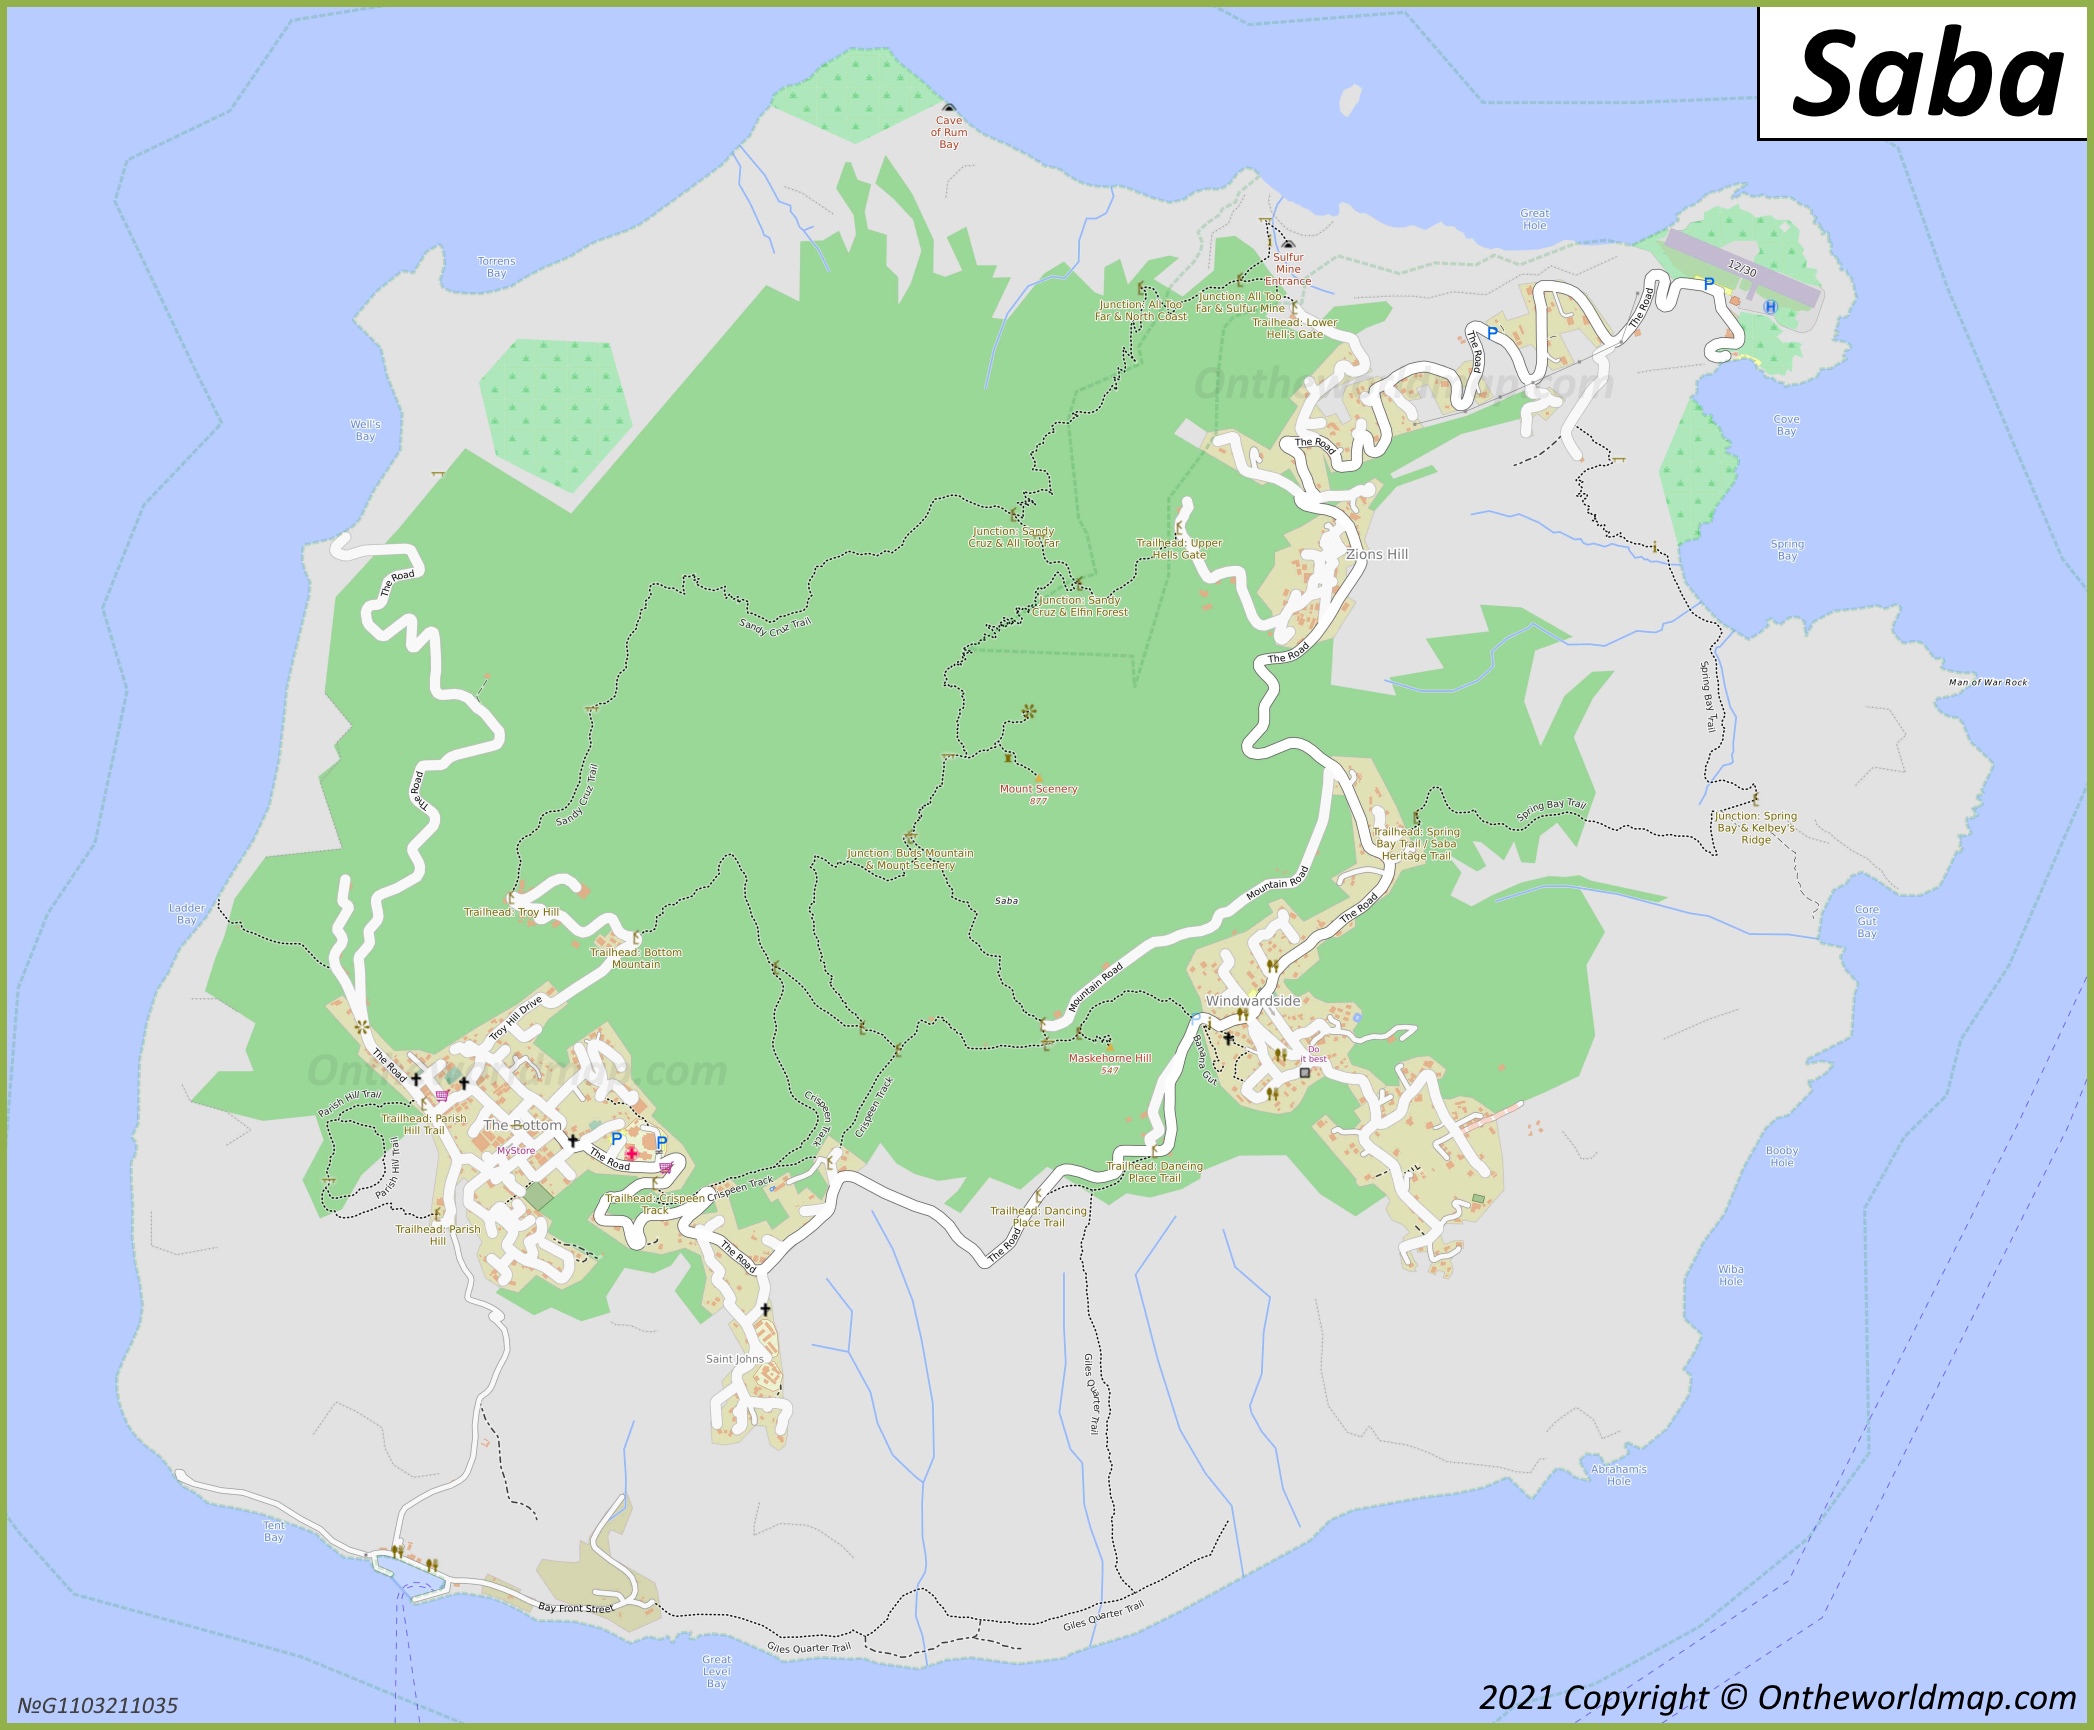 Detailed Map of Saba Island